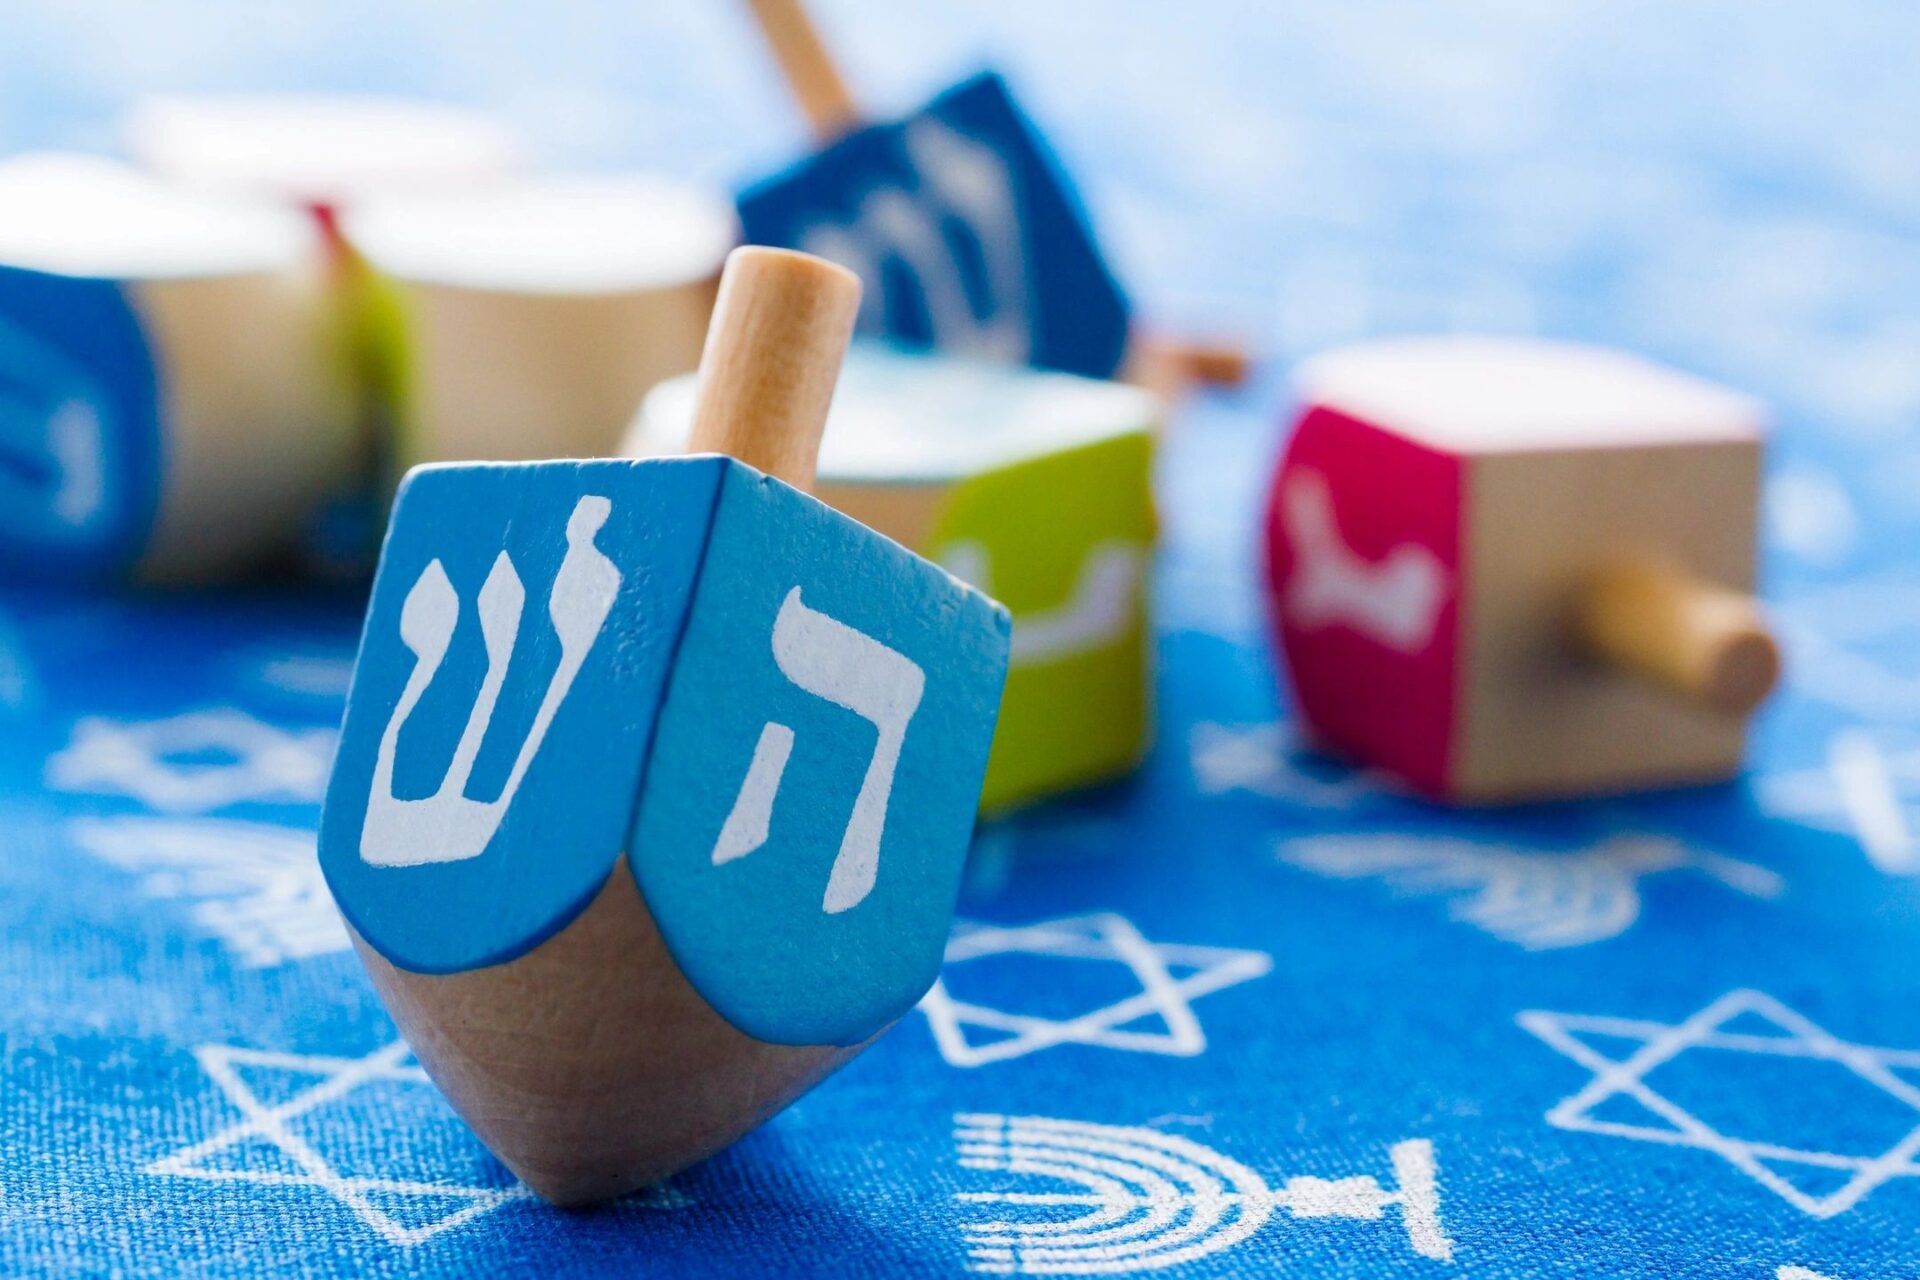 Havurah Vatik lists Chanukah celebration